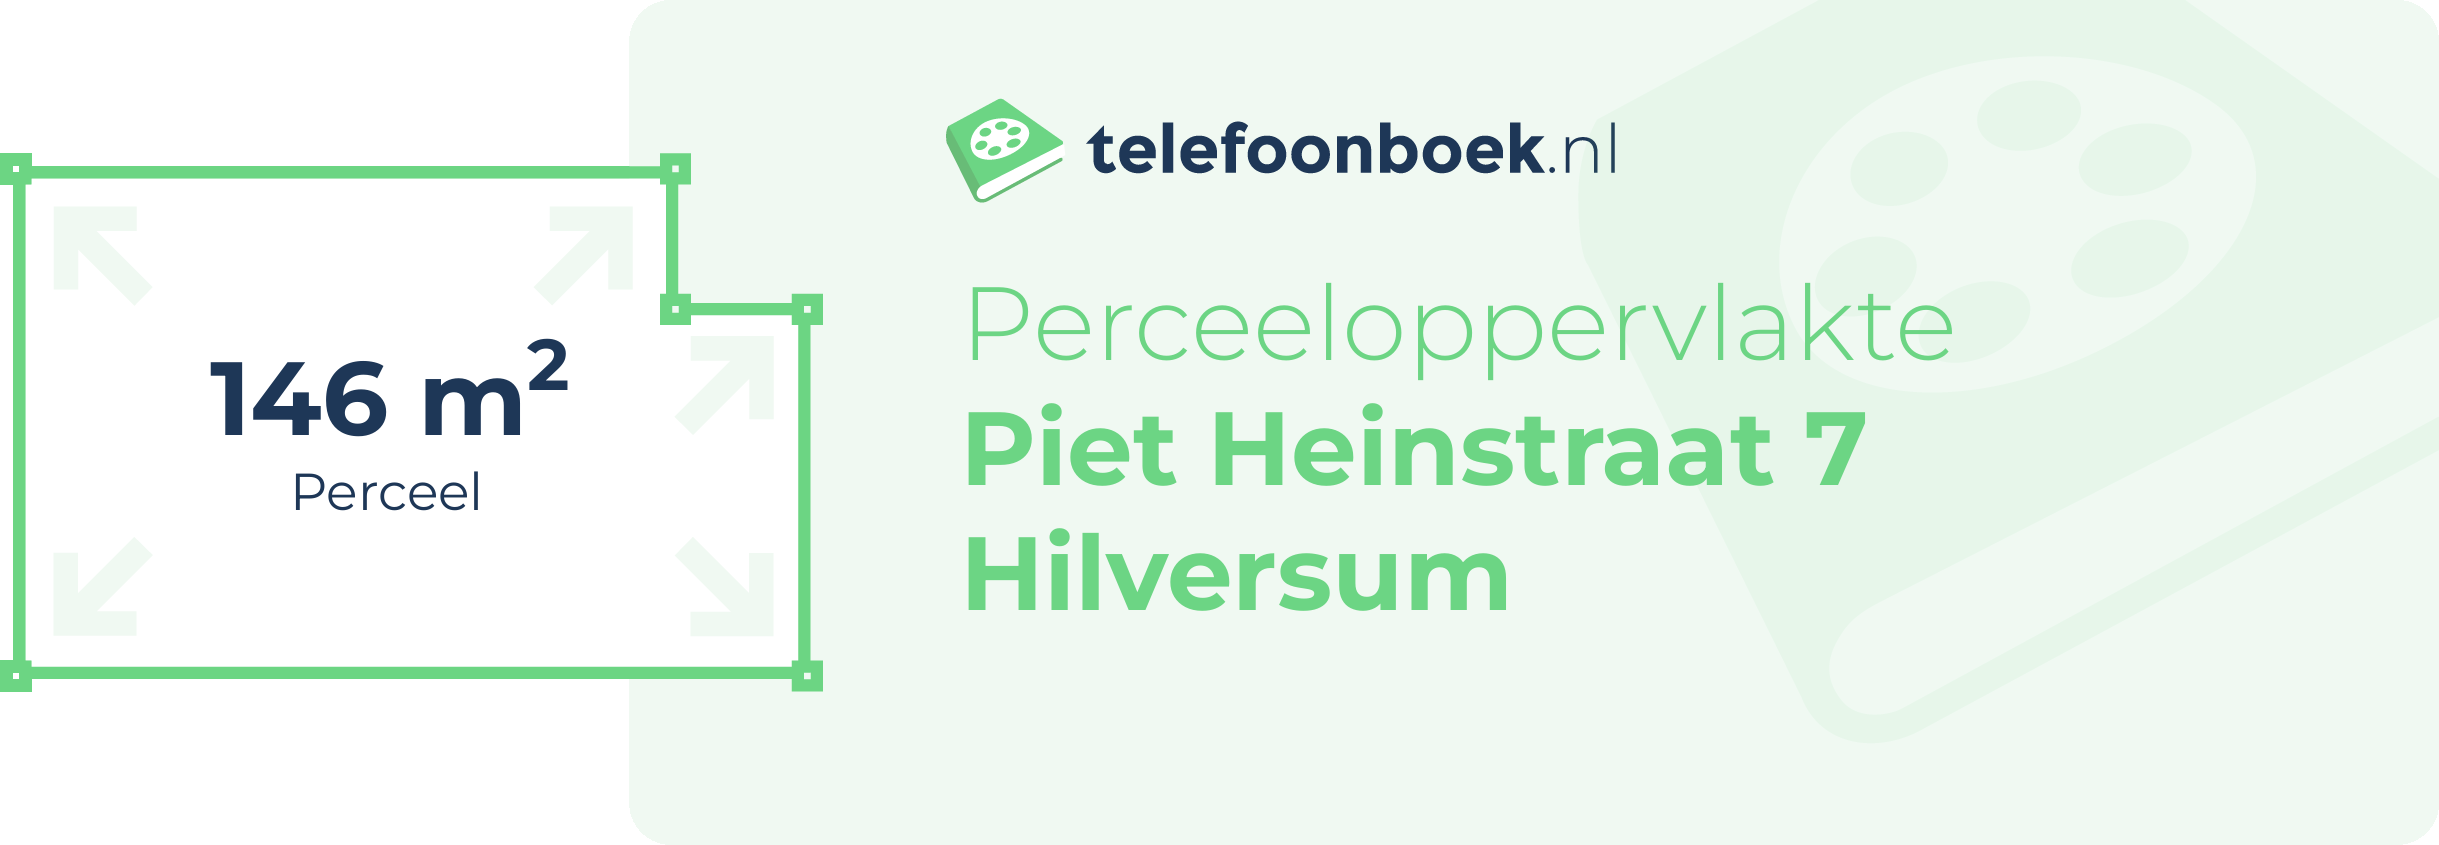 Perceeloppervlakte Piet Heinstraat 7 Hilversum